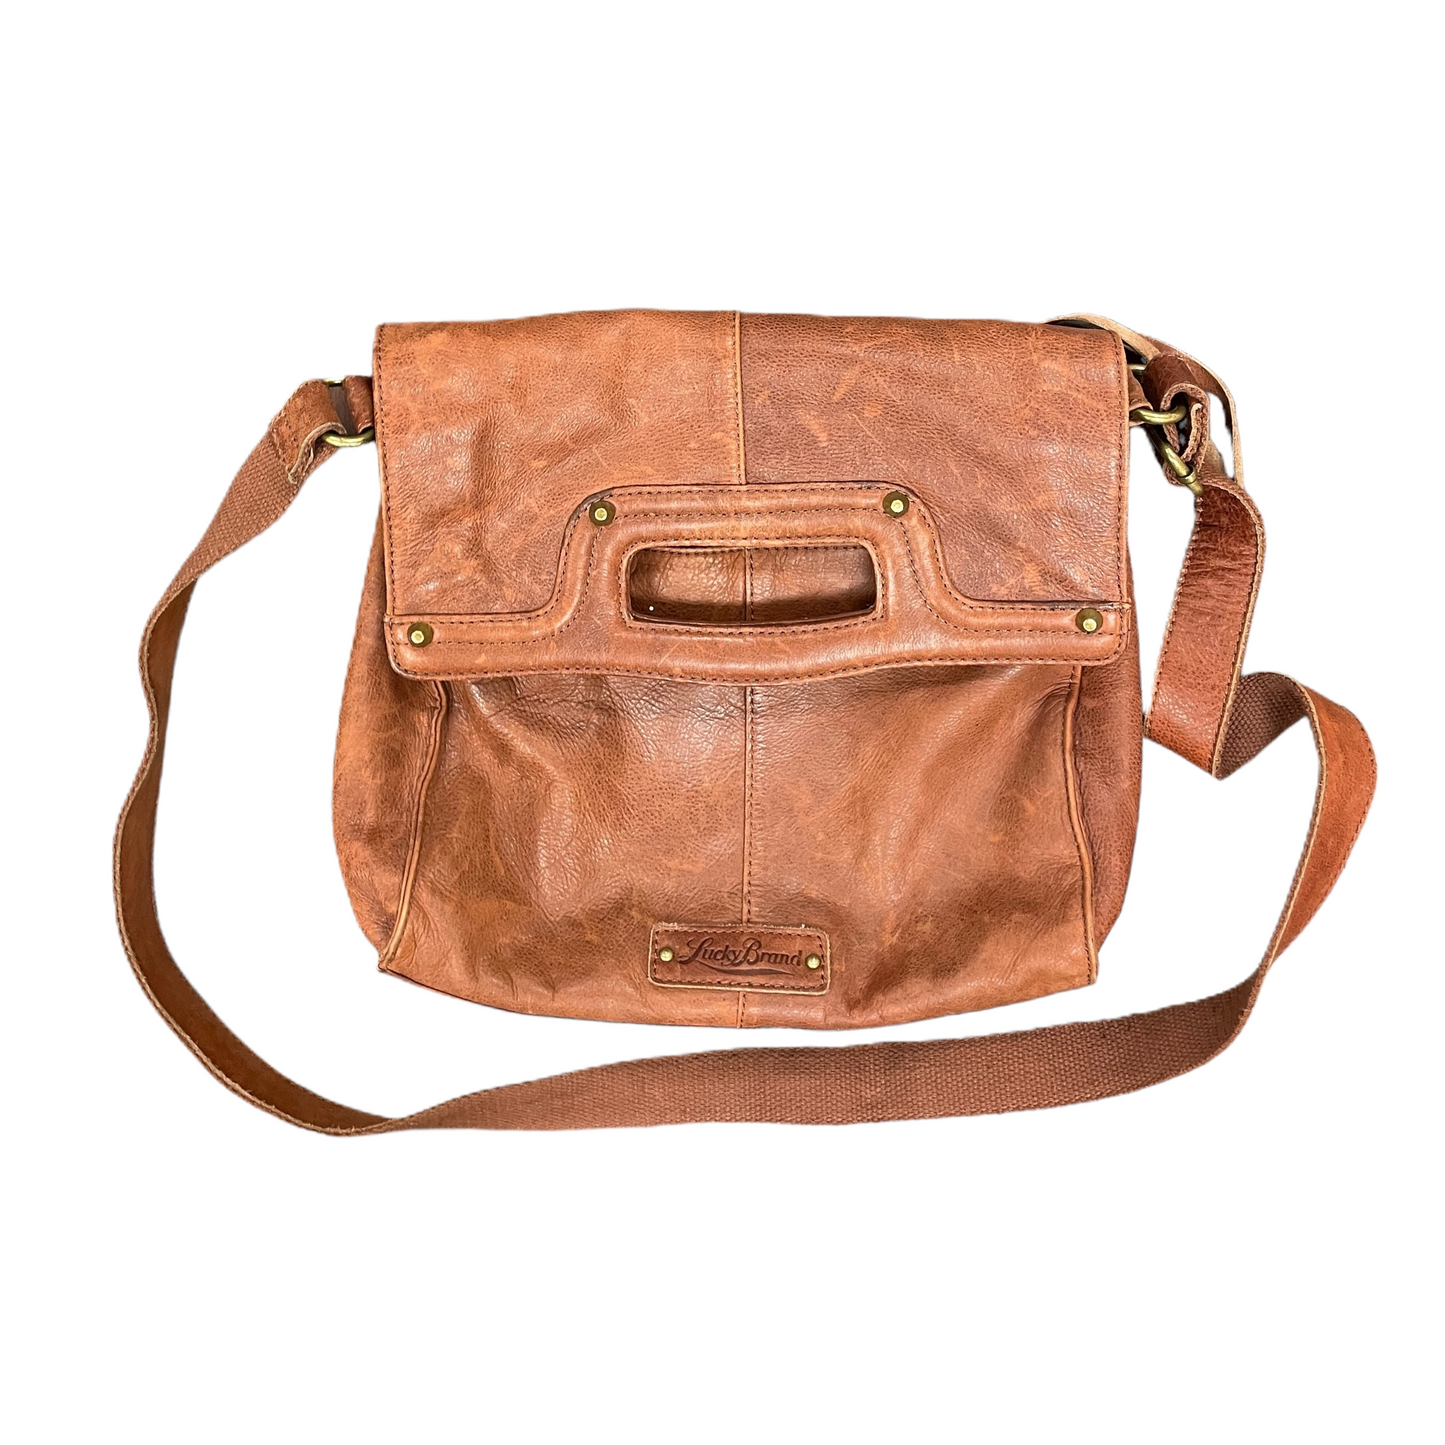 Handbag Leather By Lucky Brand, Size: Medium